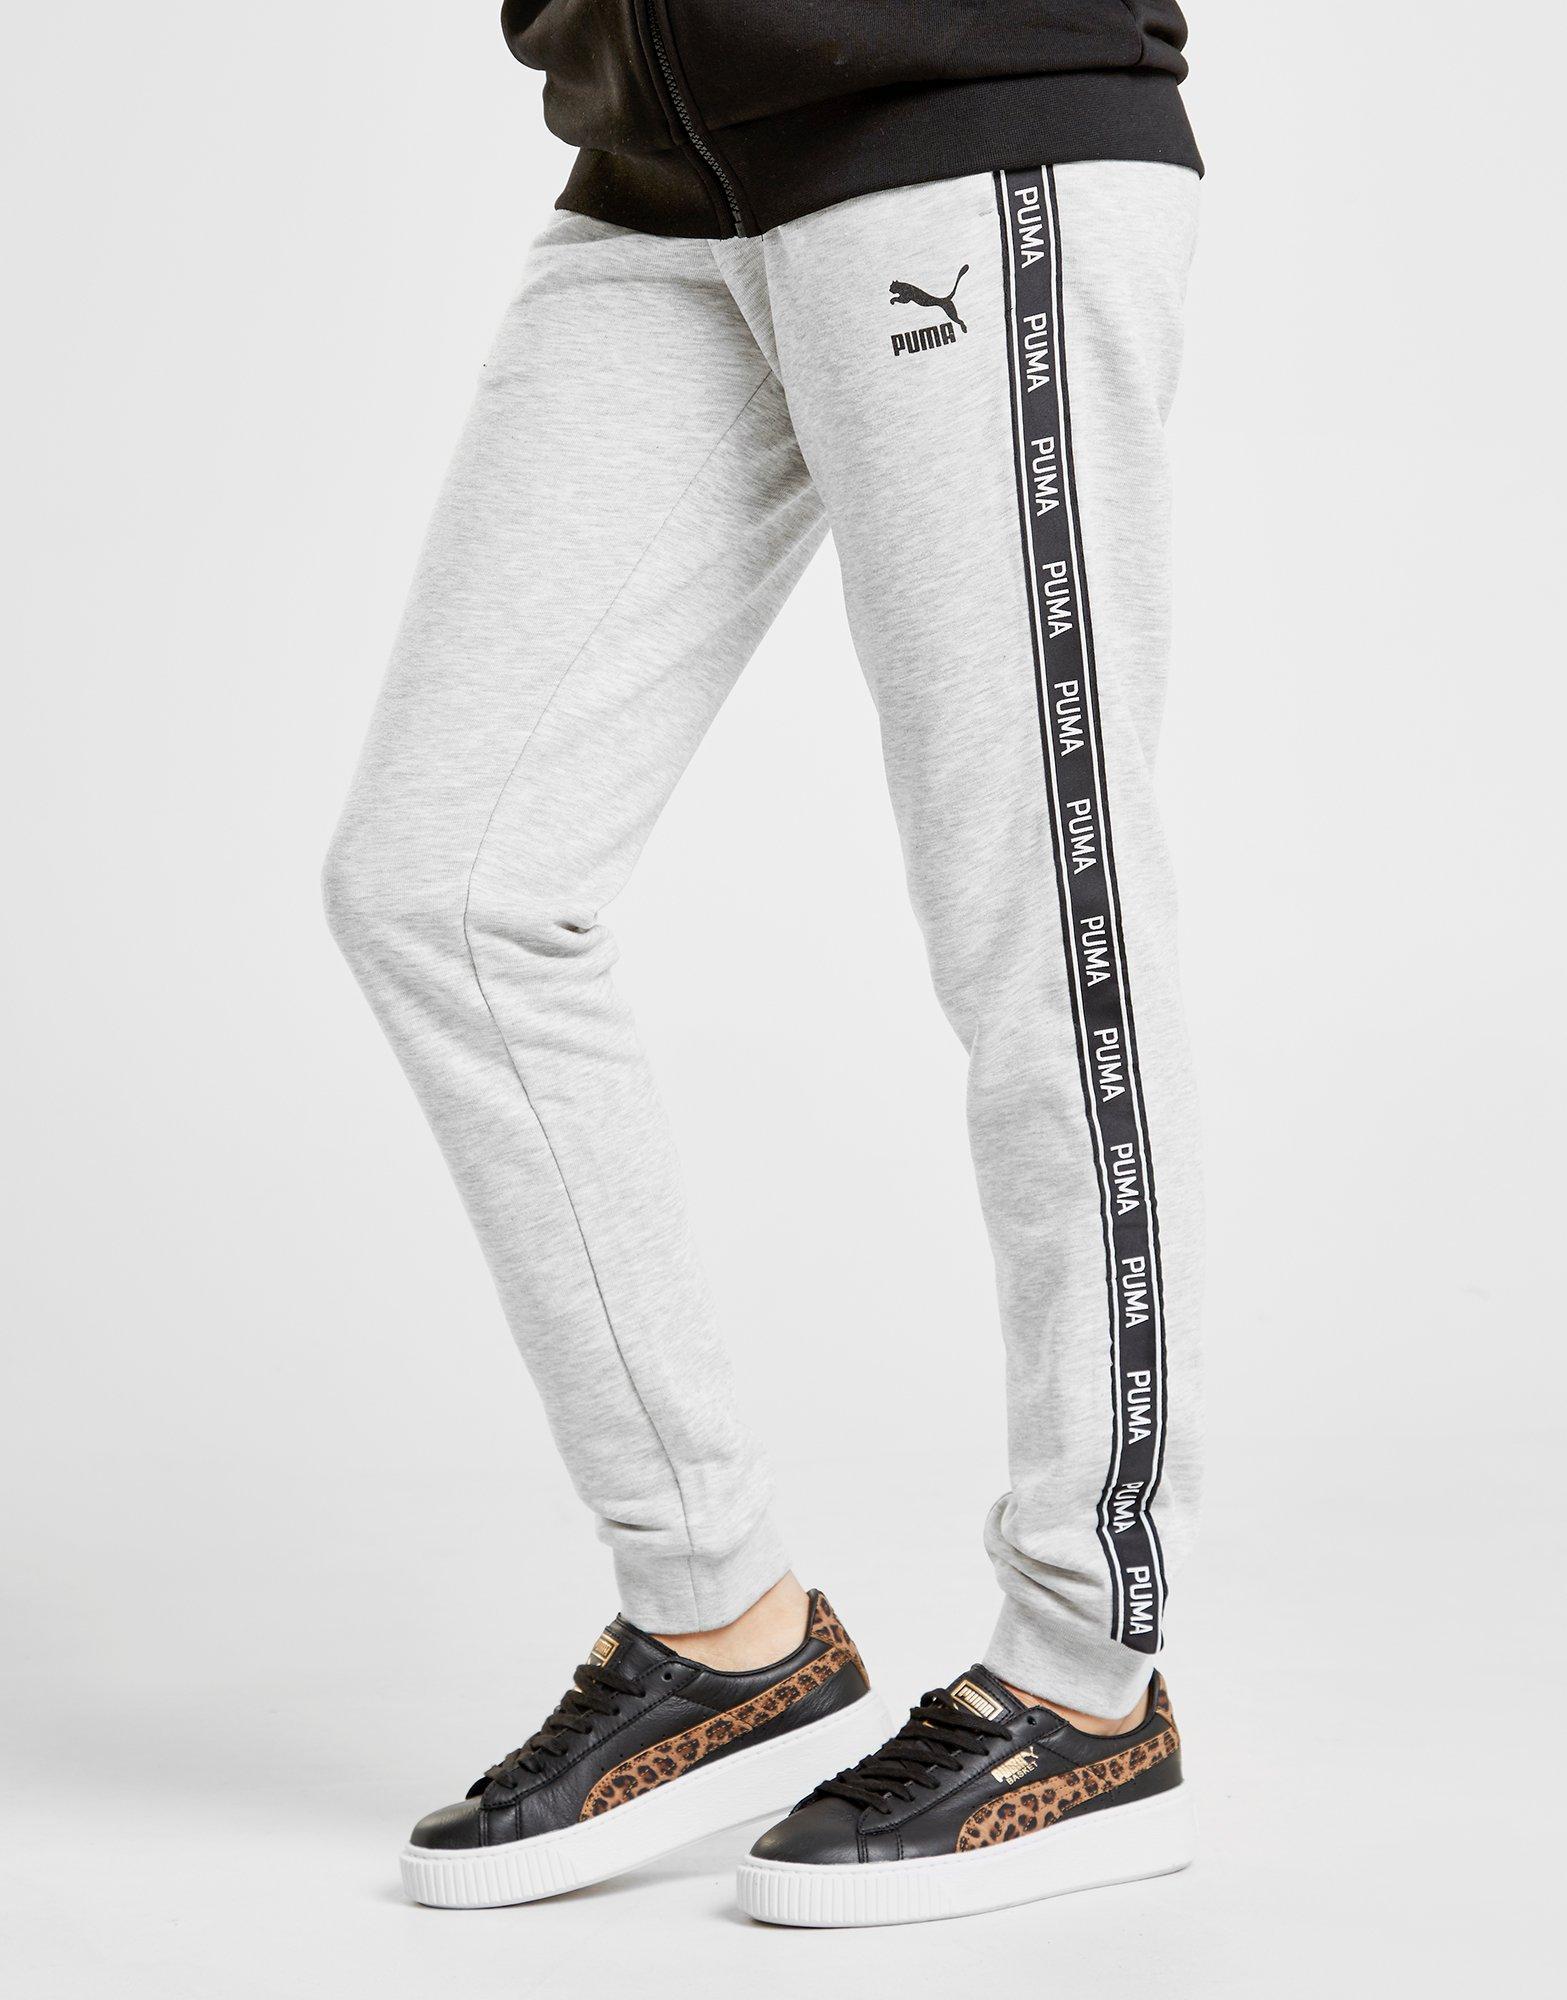 puma tape waistband track pants for Sale OFF 61%